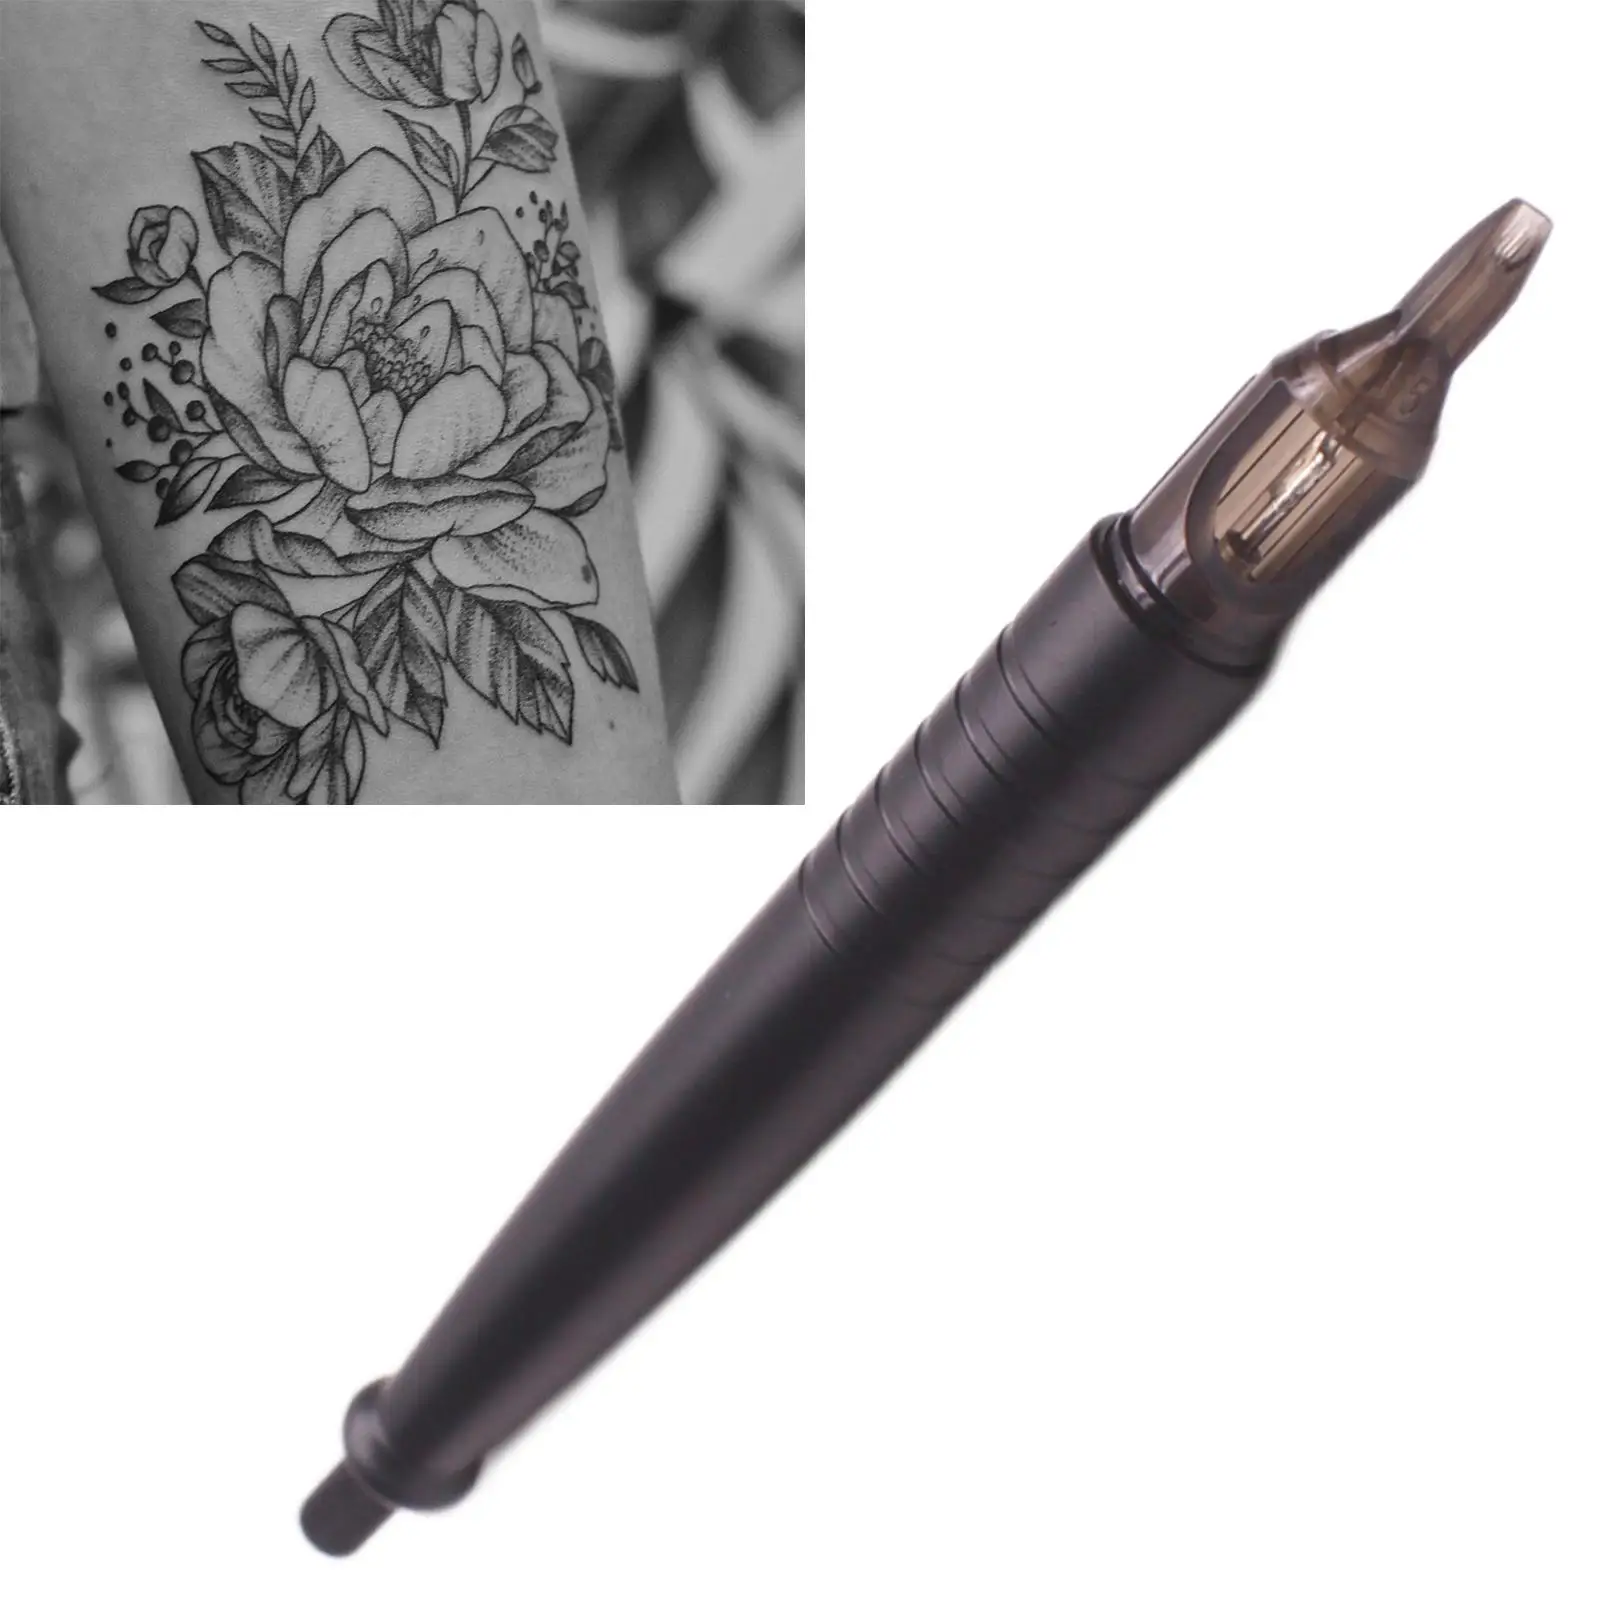 Tattoo Hand Poke Pen Stick Poke Pen Cartridges Pen Tattoo Accessoires Supplies Aluminum Alloy DIY Tool for Tattoo Artist Home